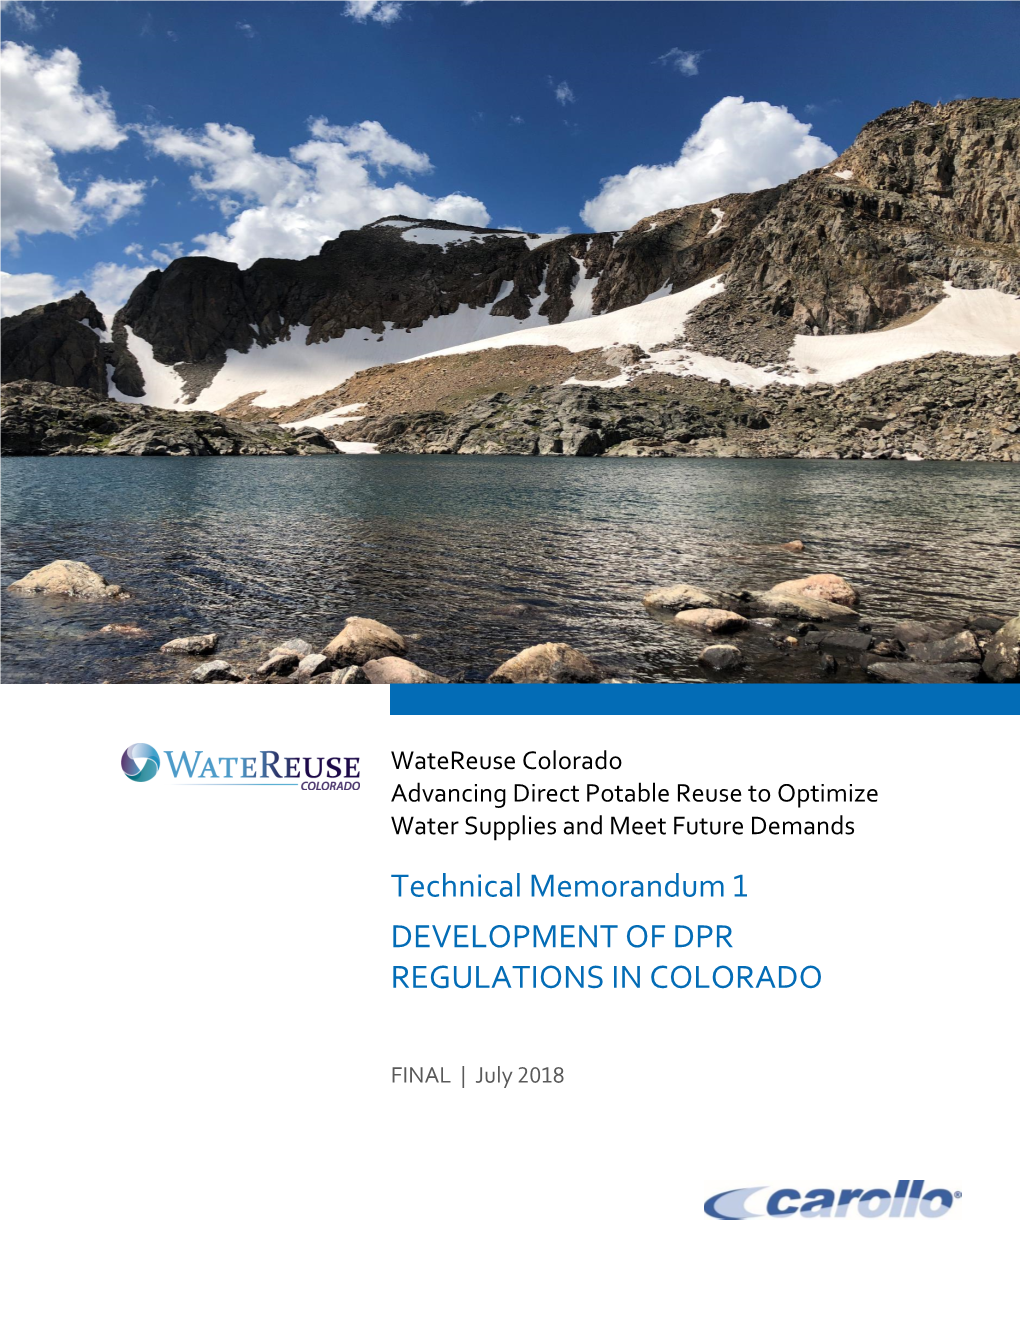 Watereuse Colorado: Advancing Direct Potable Reuse to Optimize